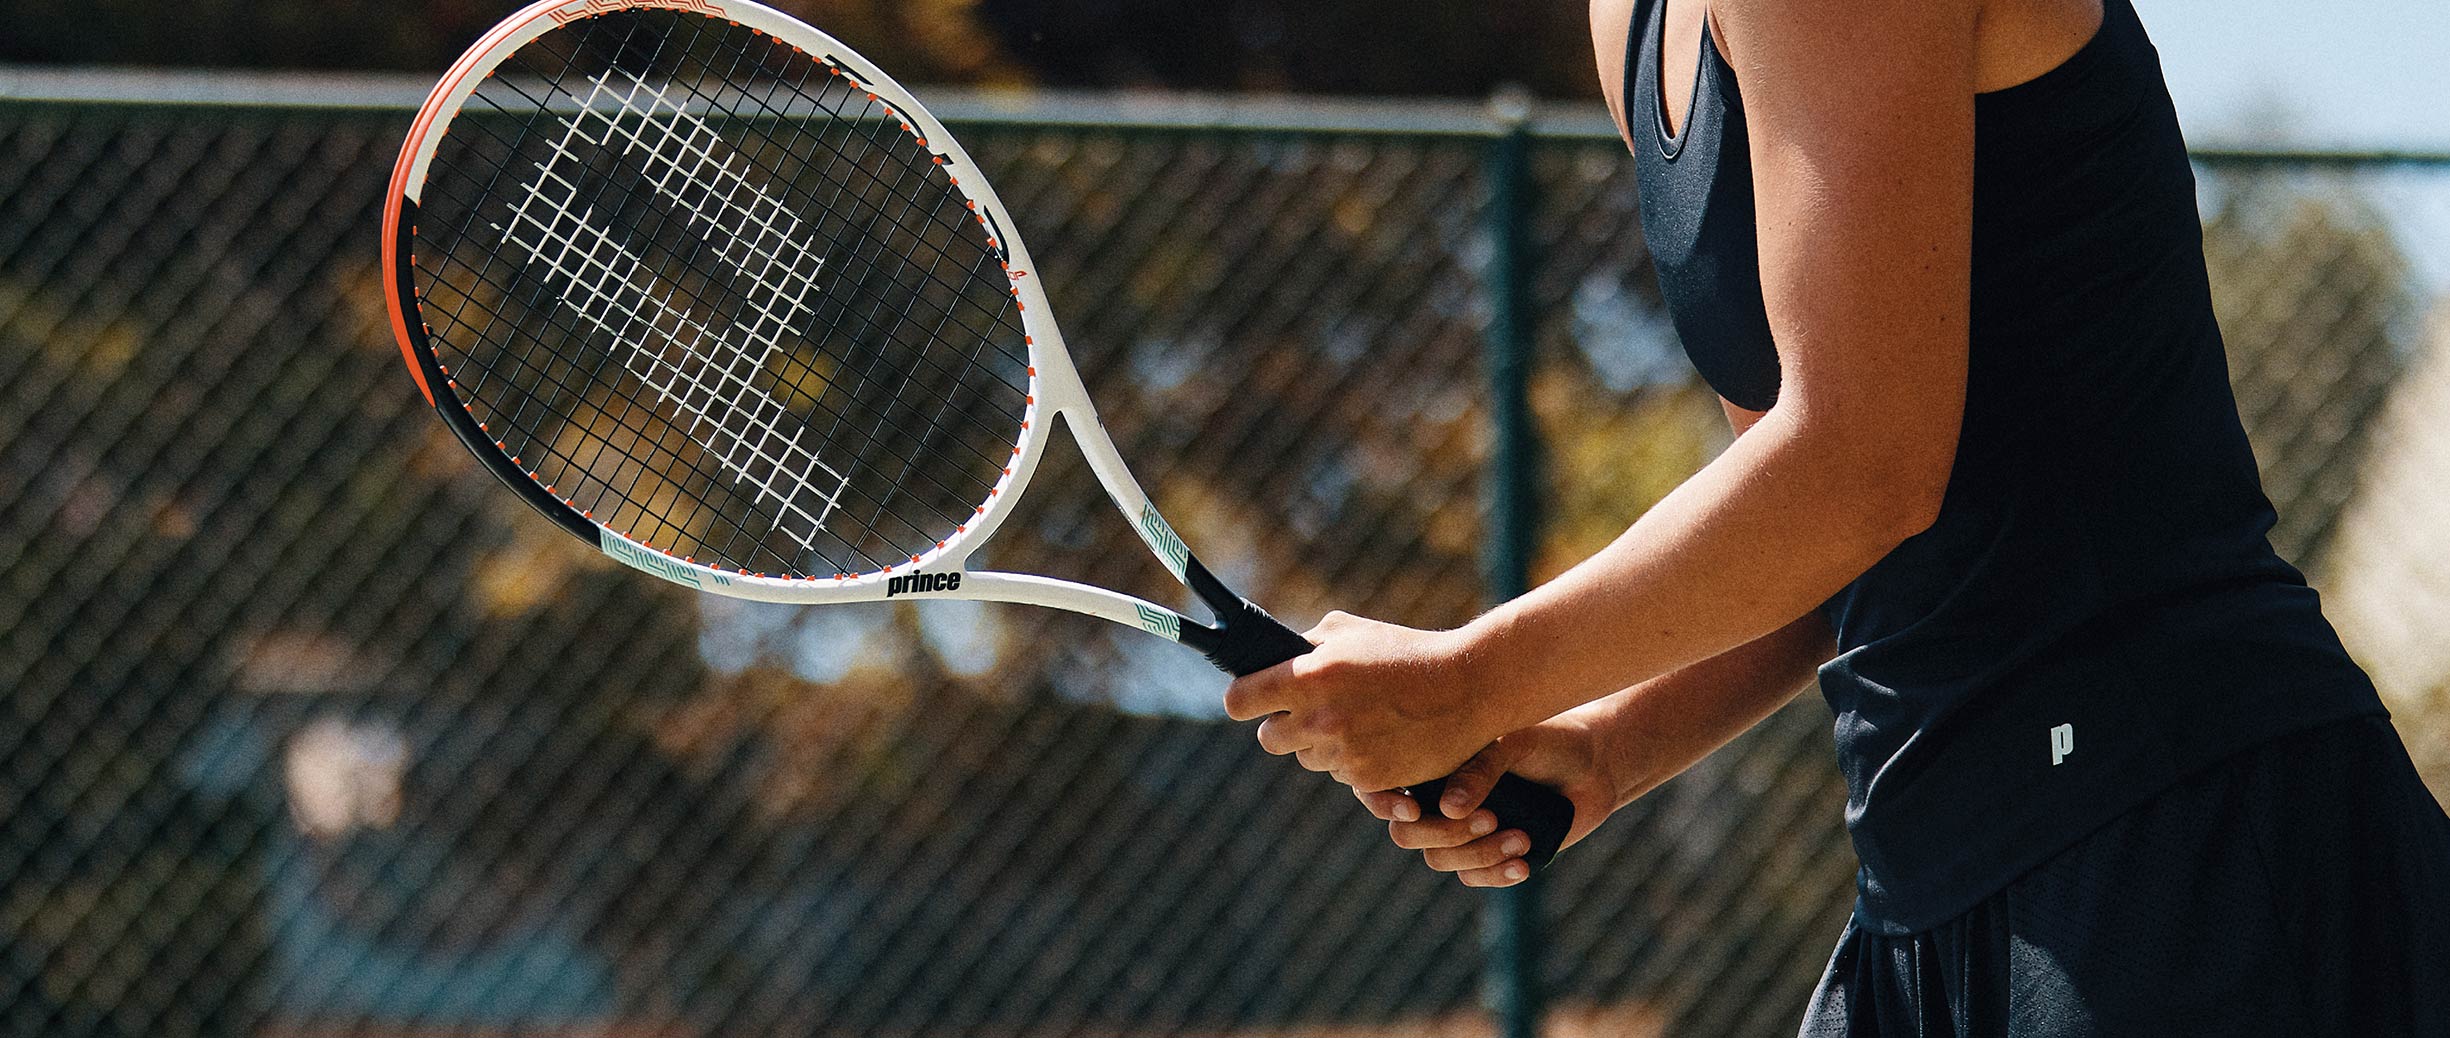 Prince - Tennis, Badminton, Squash Racquets and more